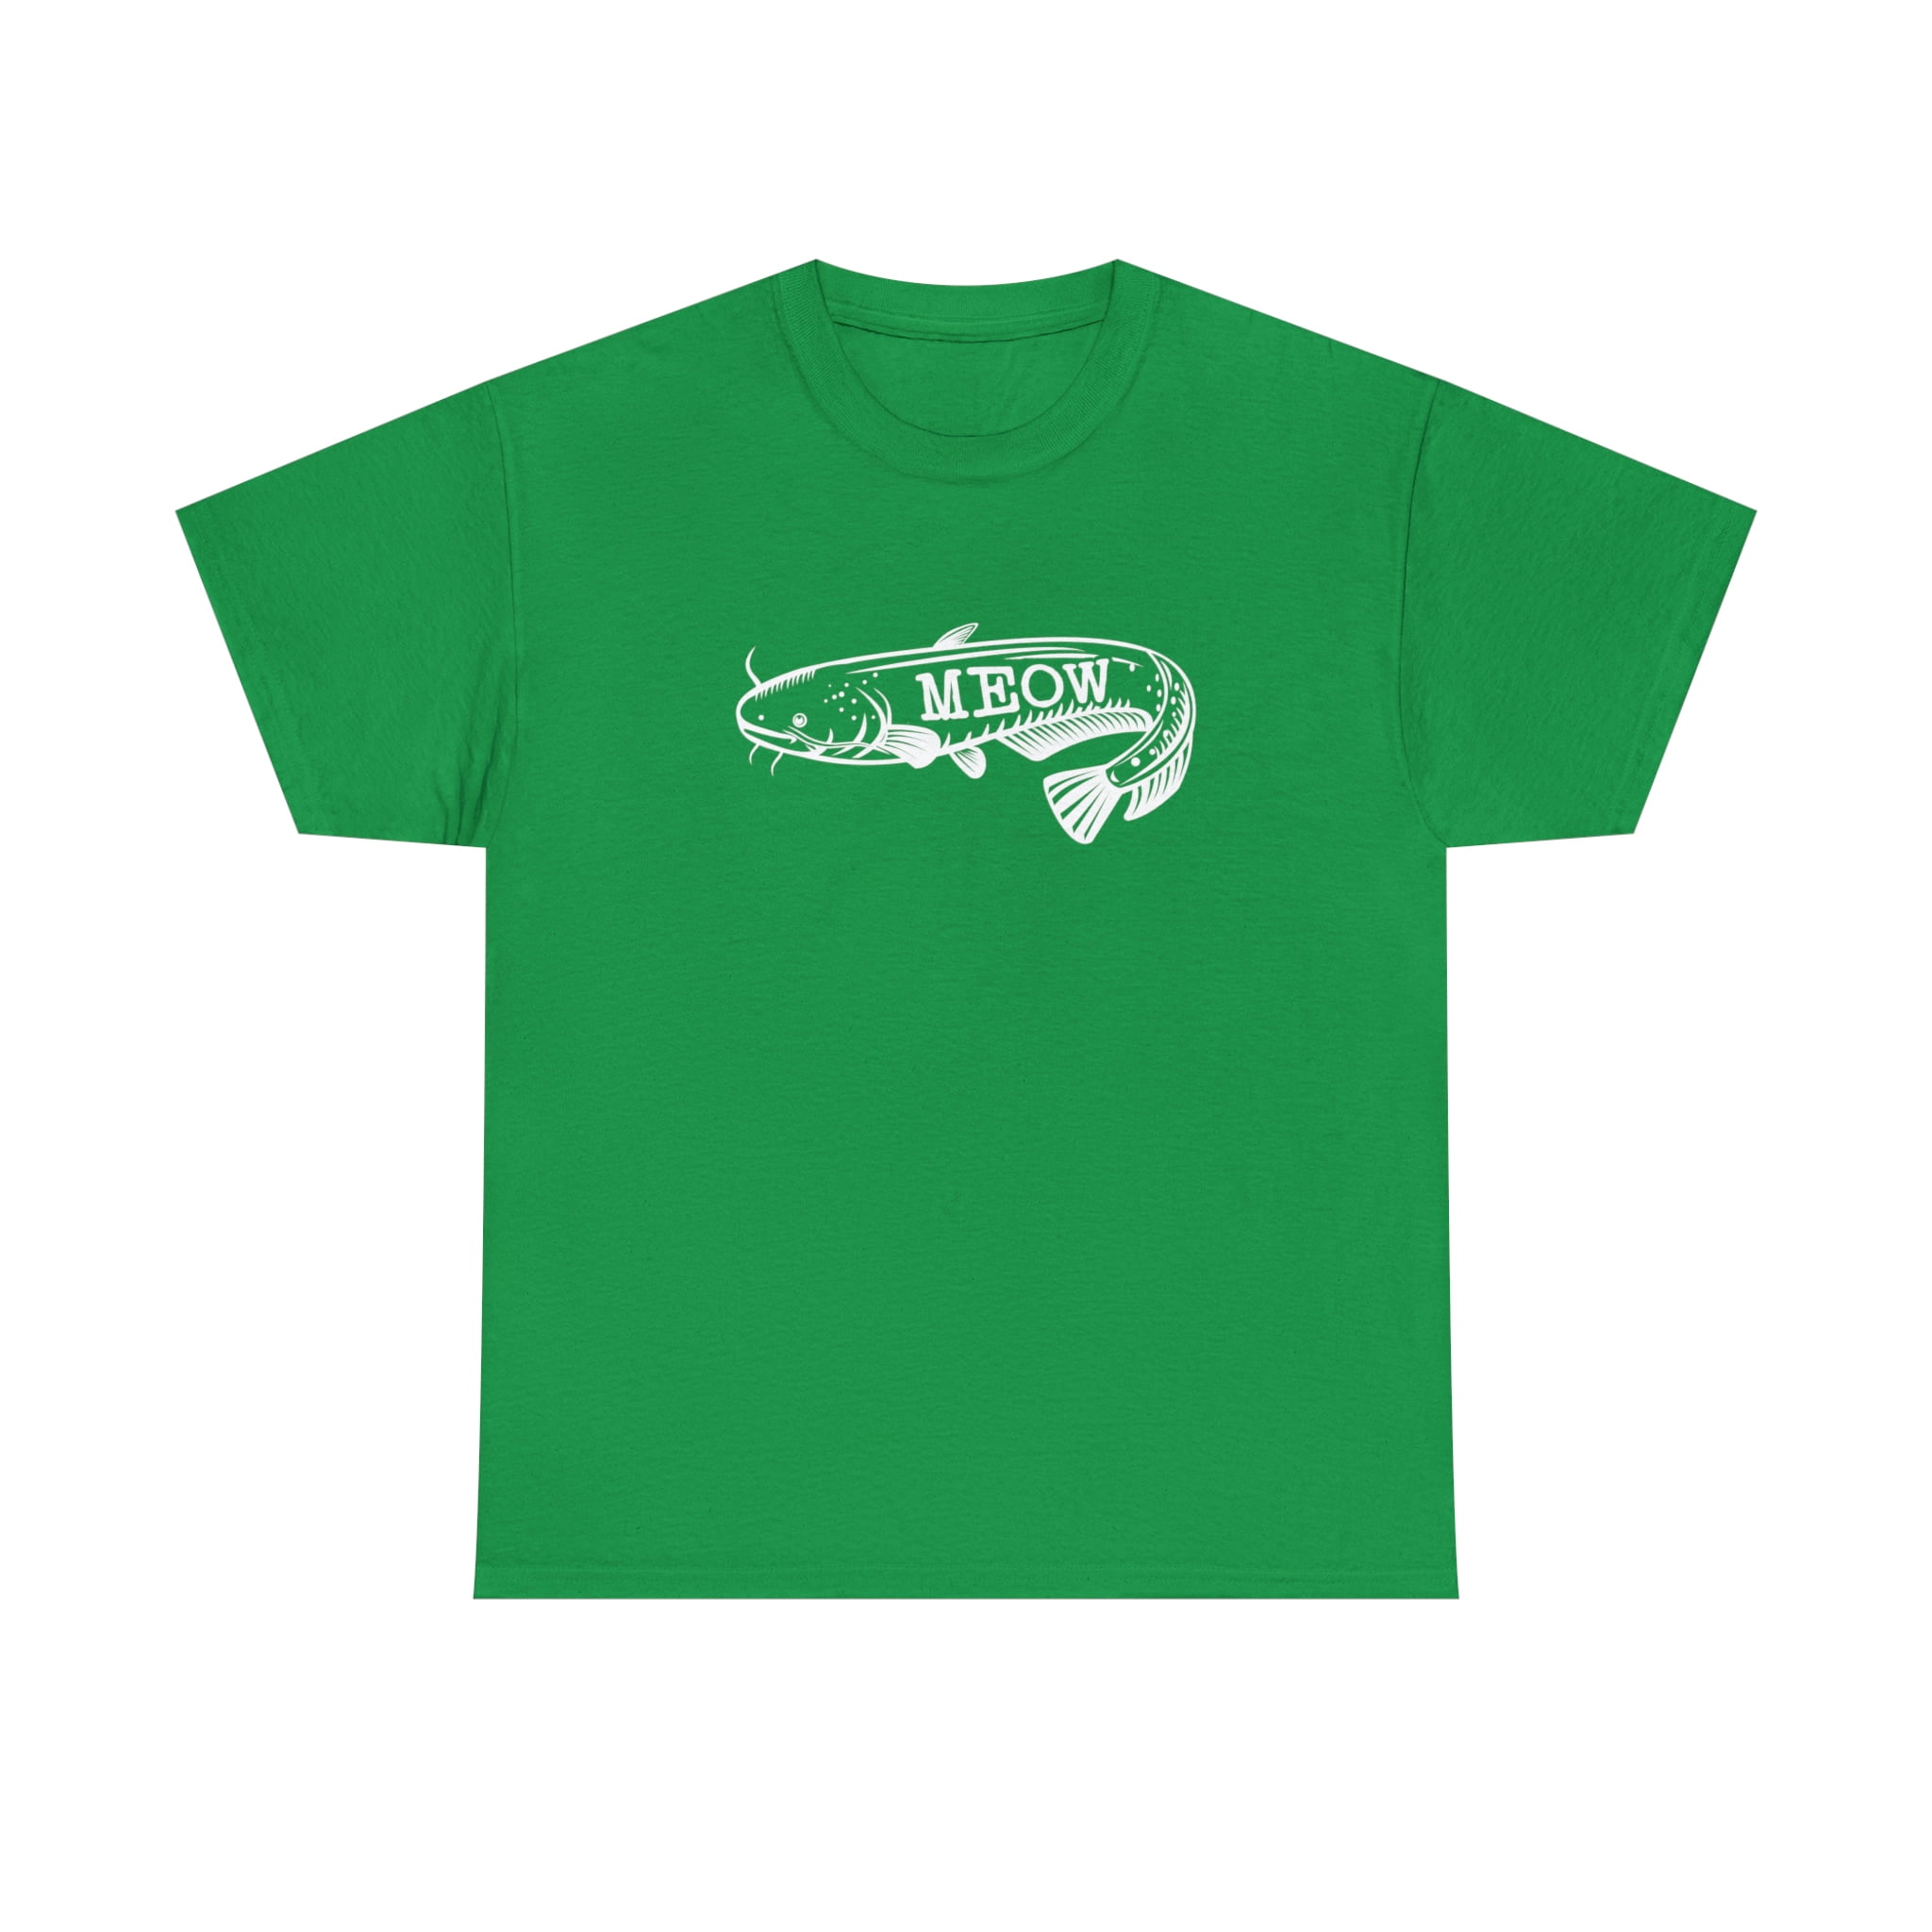 Catfish Hunter Shirt | Catfish Shirt | Catfish T-Shirt | Catfish Fishing | Catfish | Fishing Shirts for Men | Father's Day Gift | Noodling